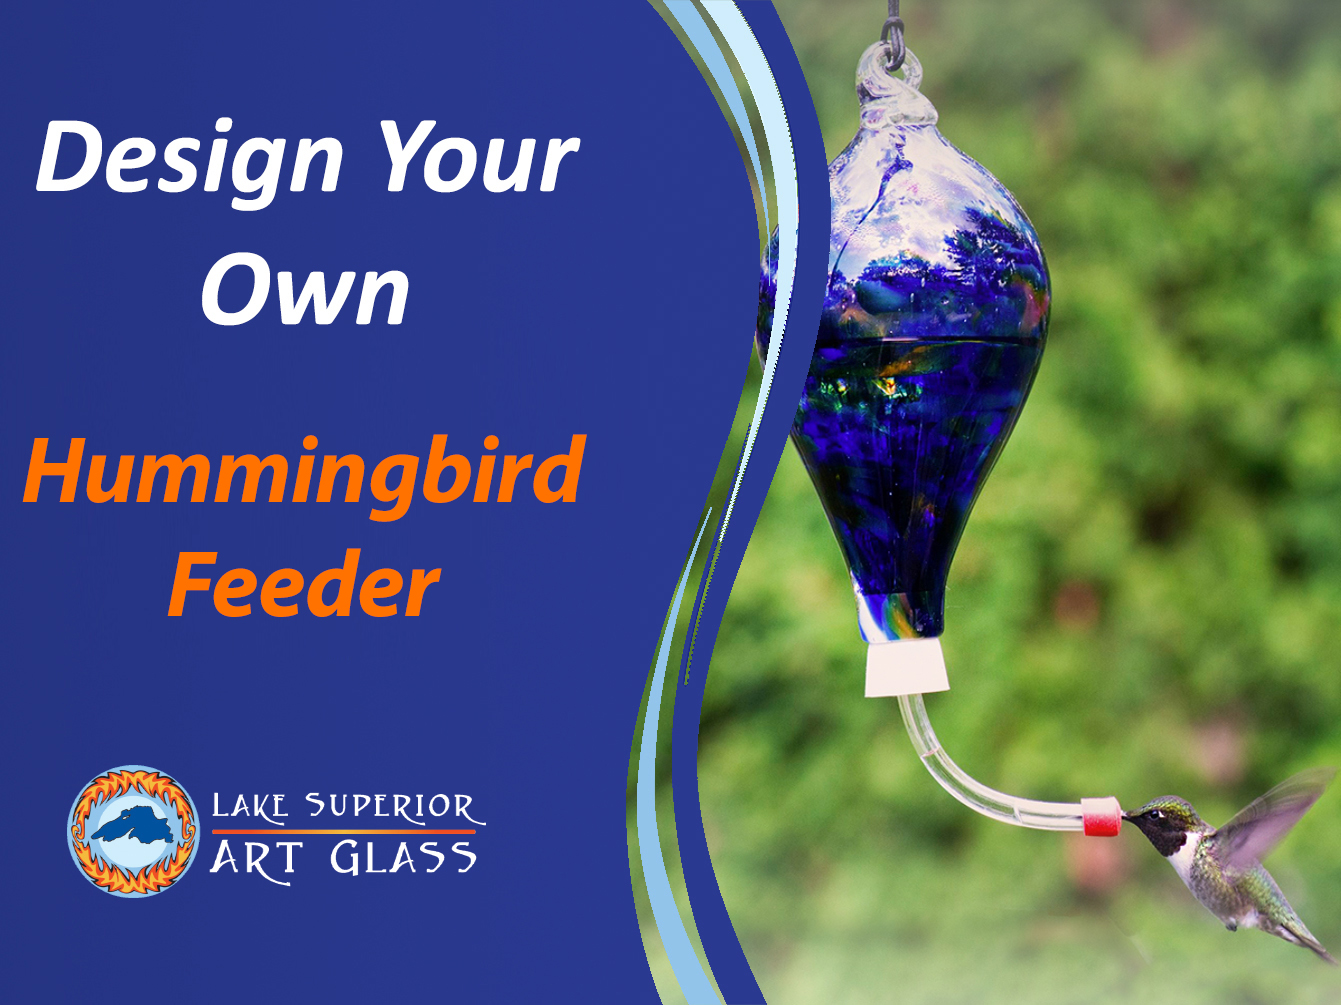 Design your own hummingbird feeder